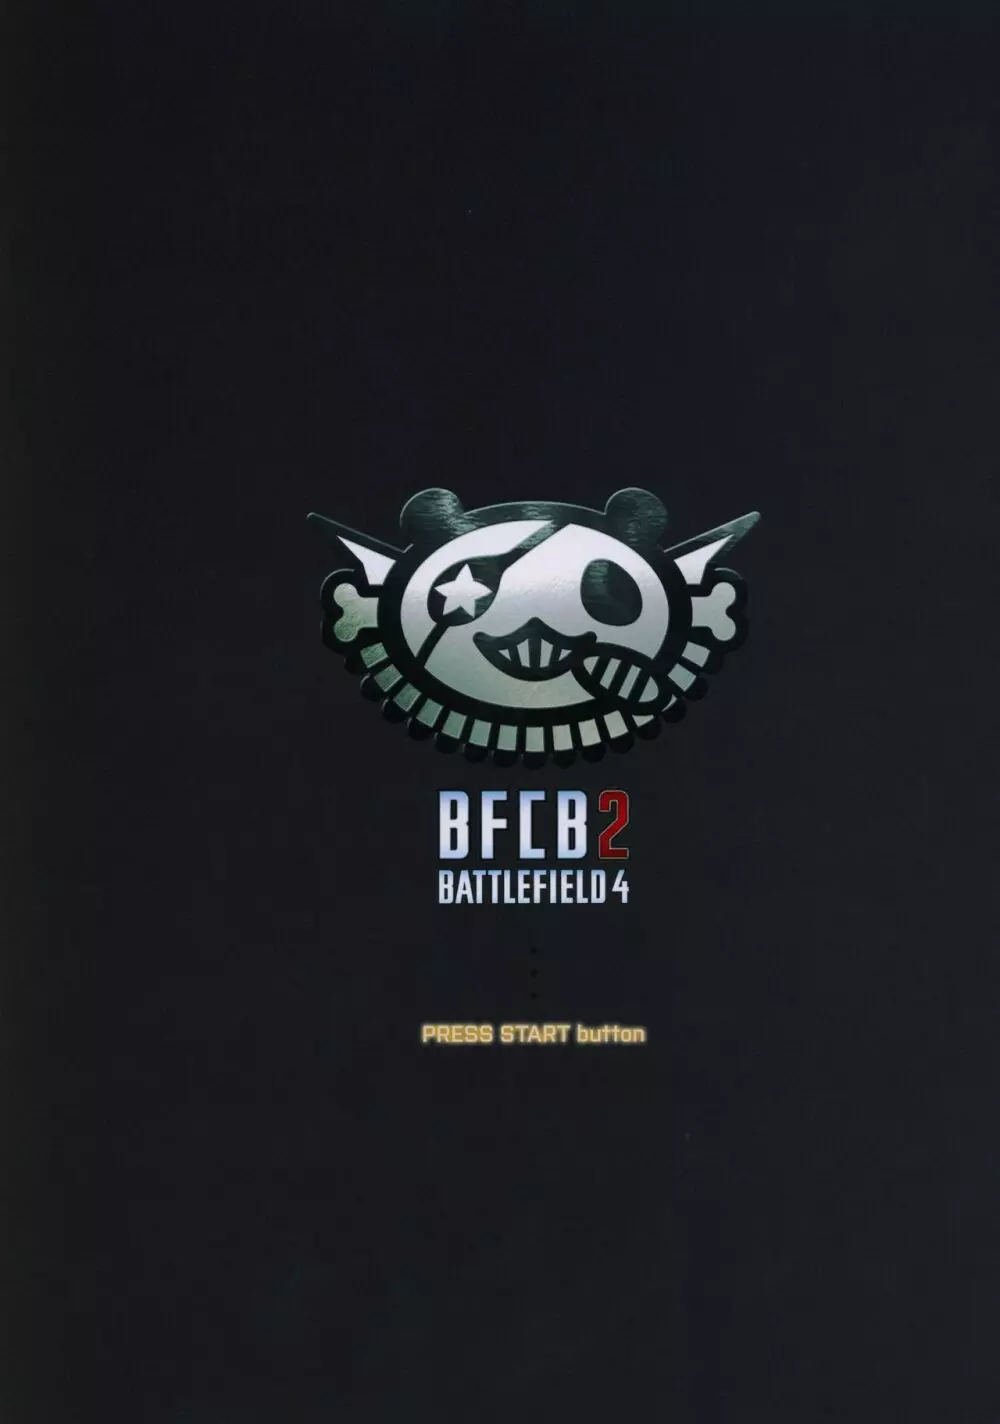 BFCB2 BATTLEFIELD 4 - page32